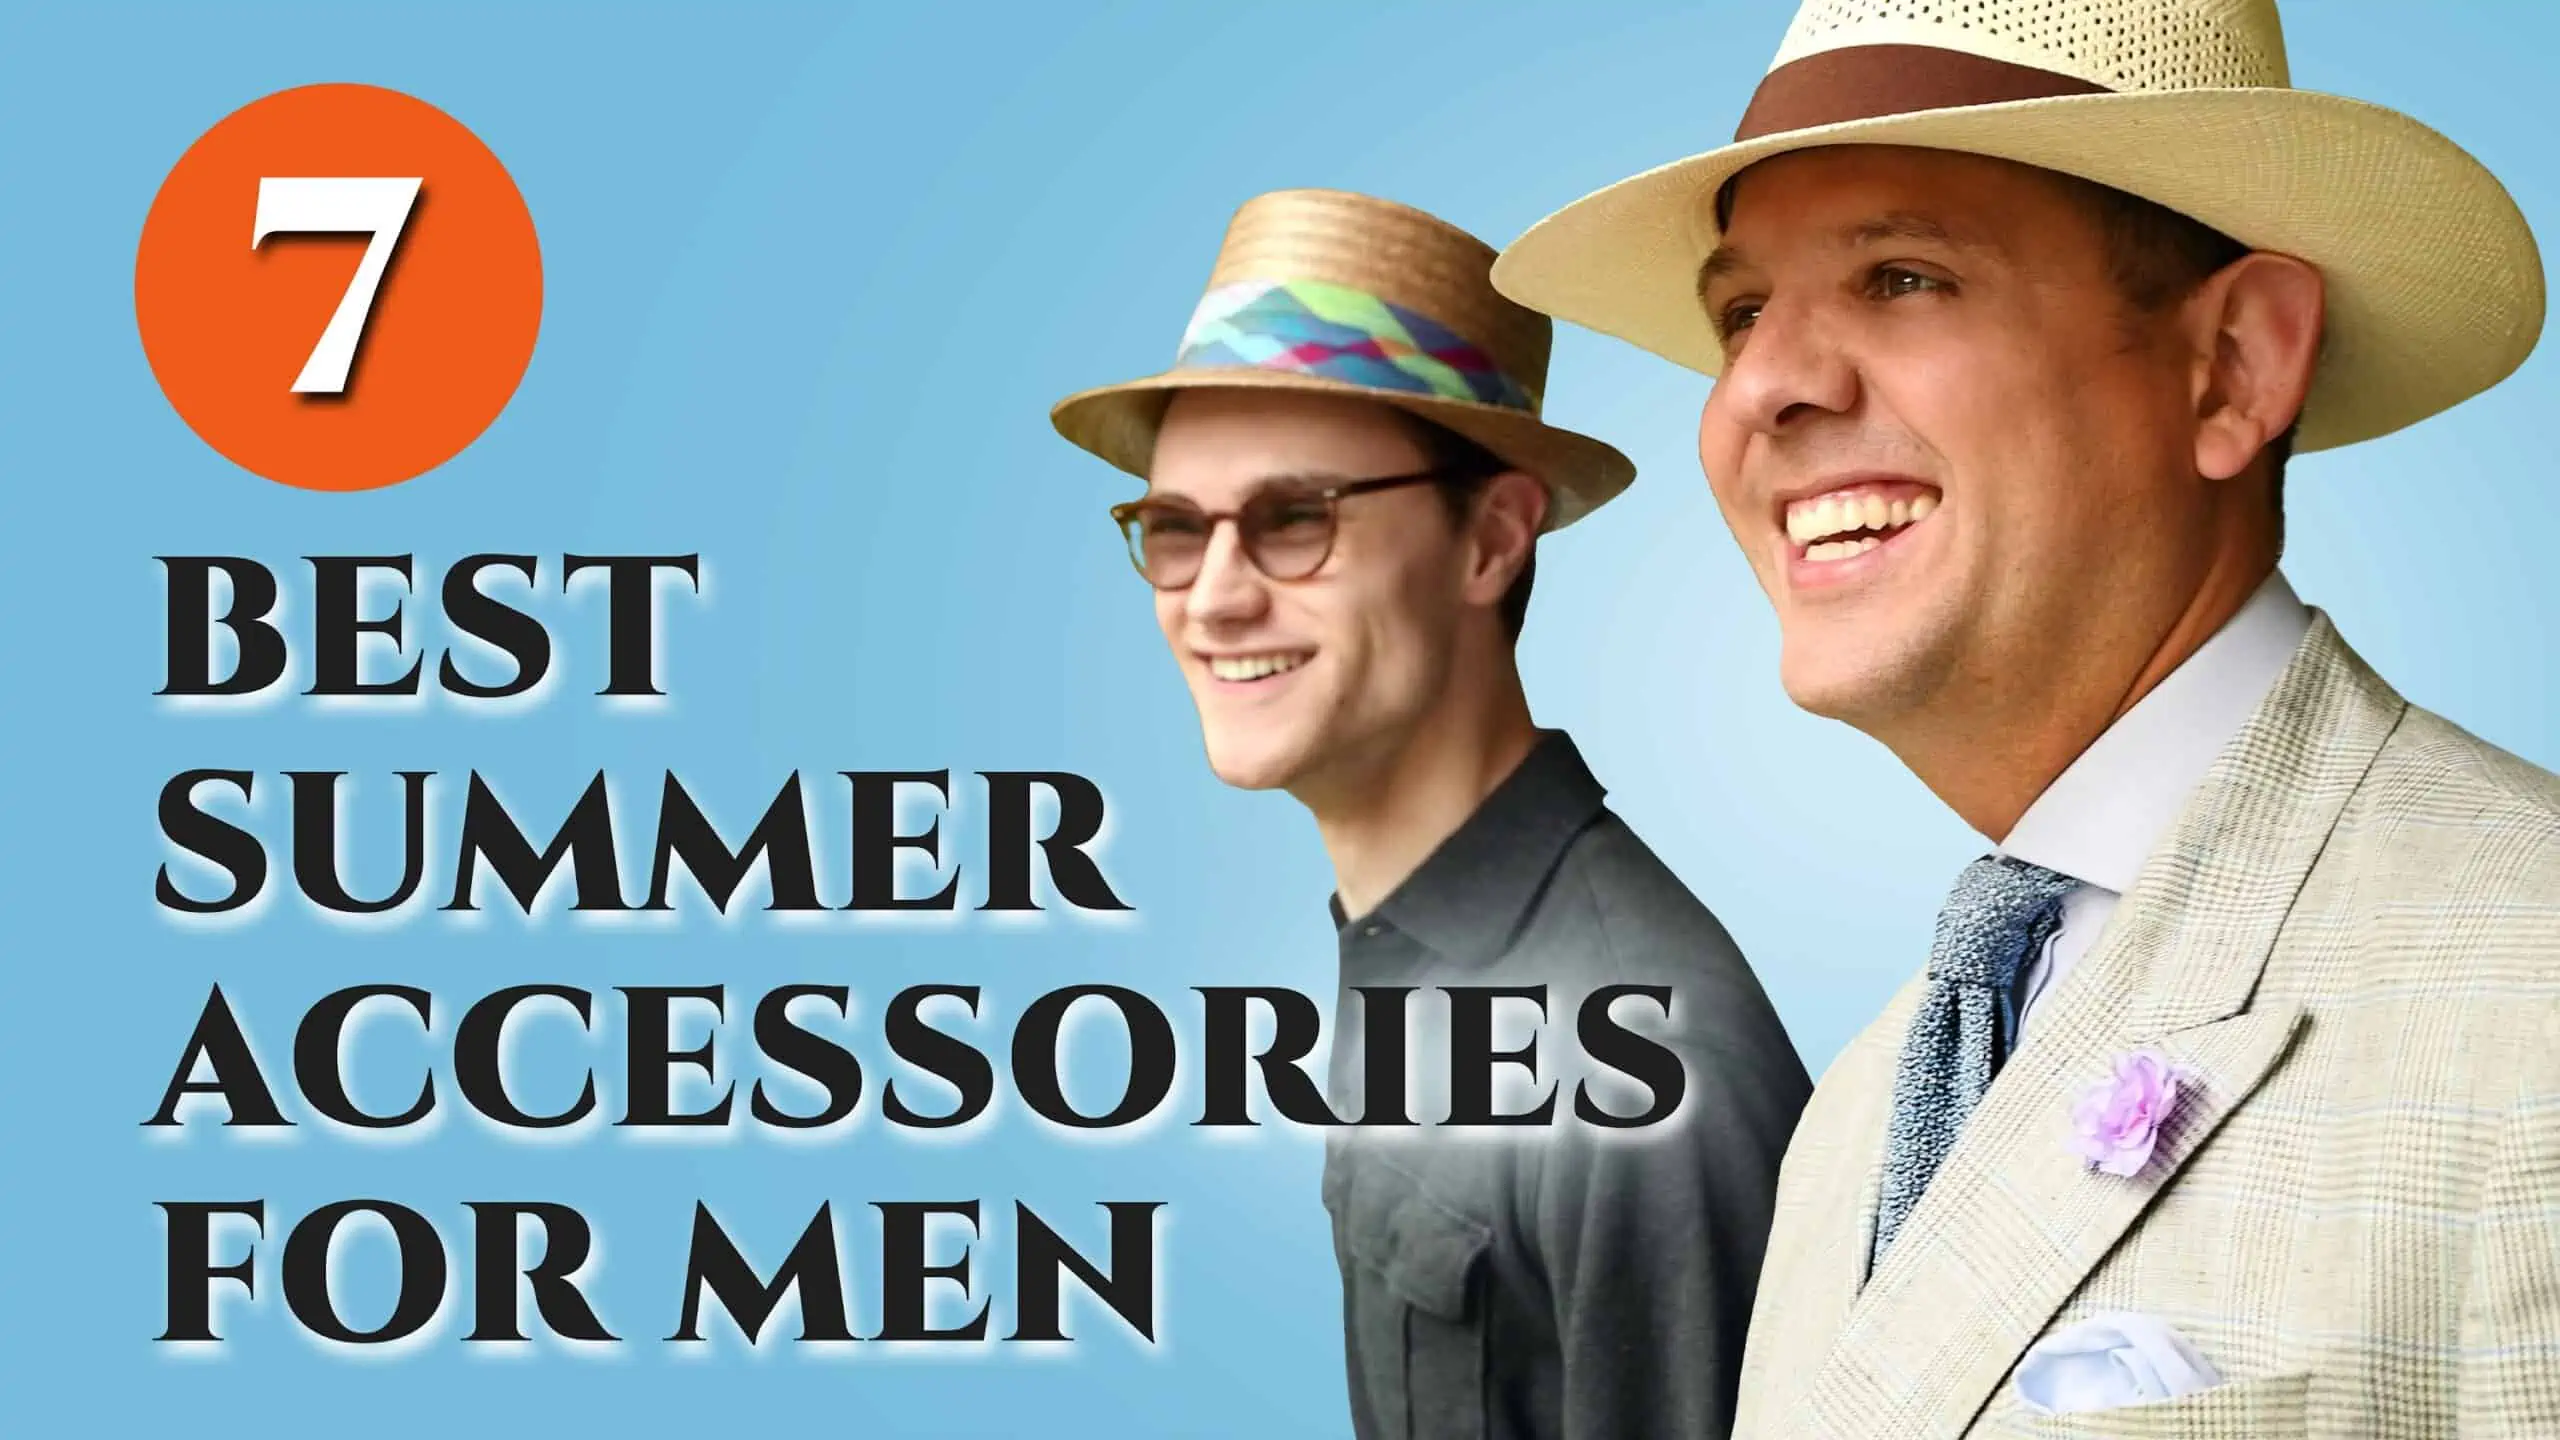 7 best summer accessories 3840x2160 scaled